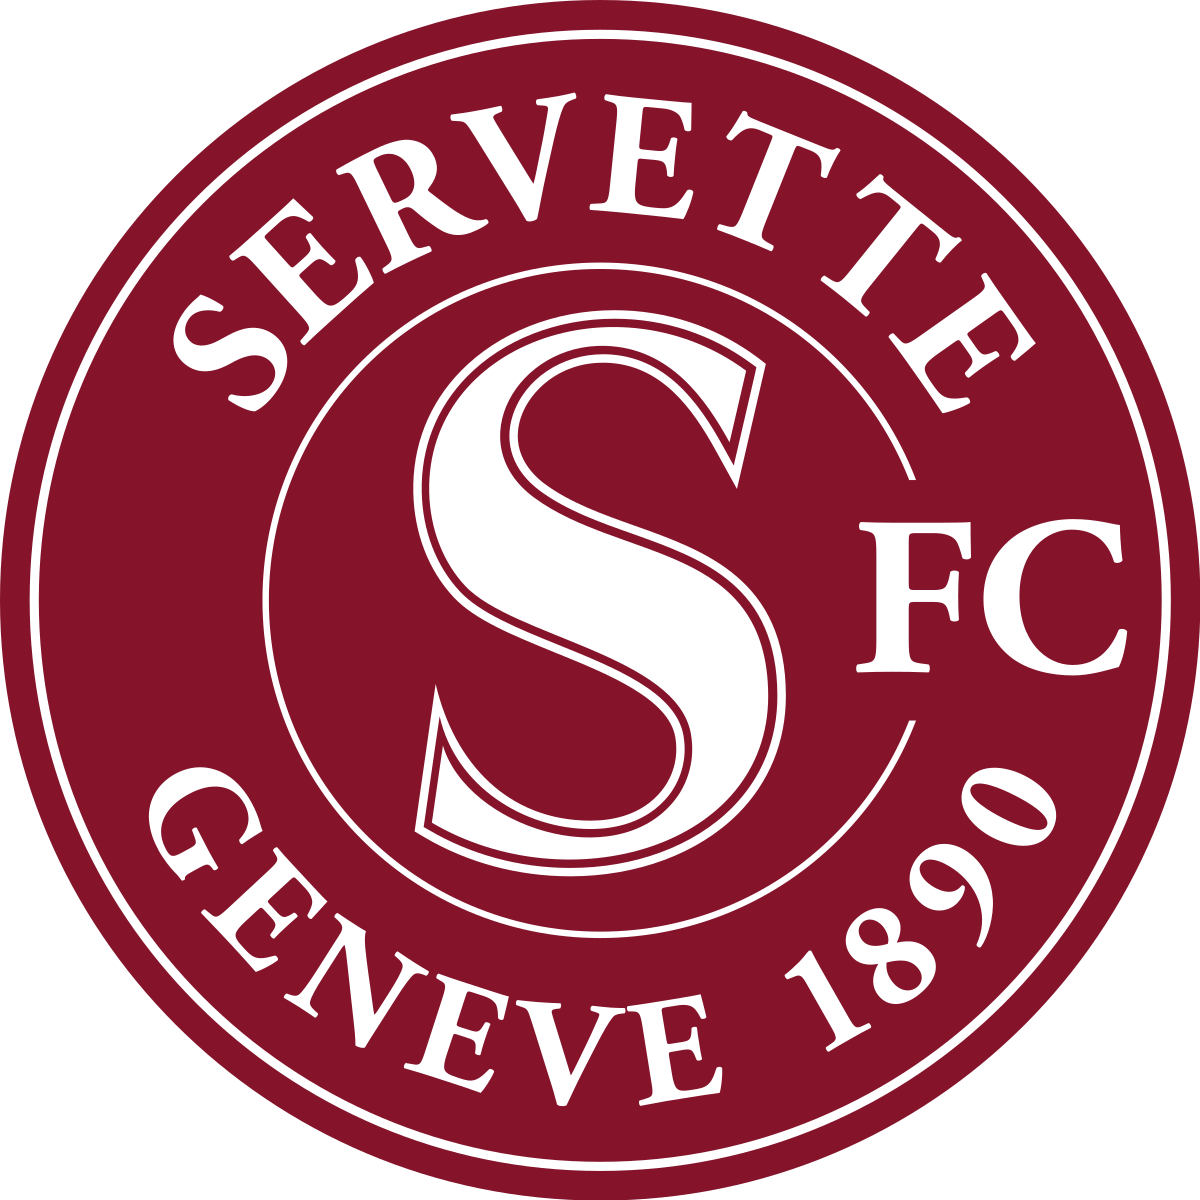 Servette FC Tickets